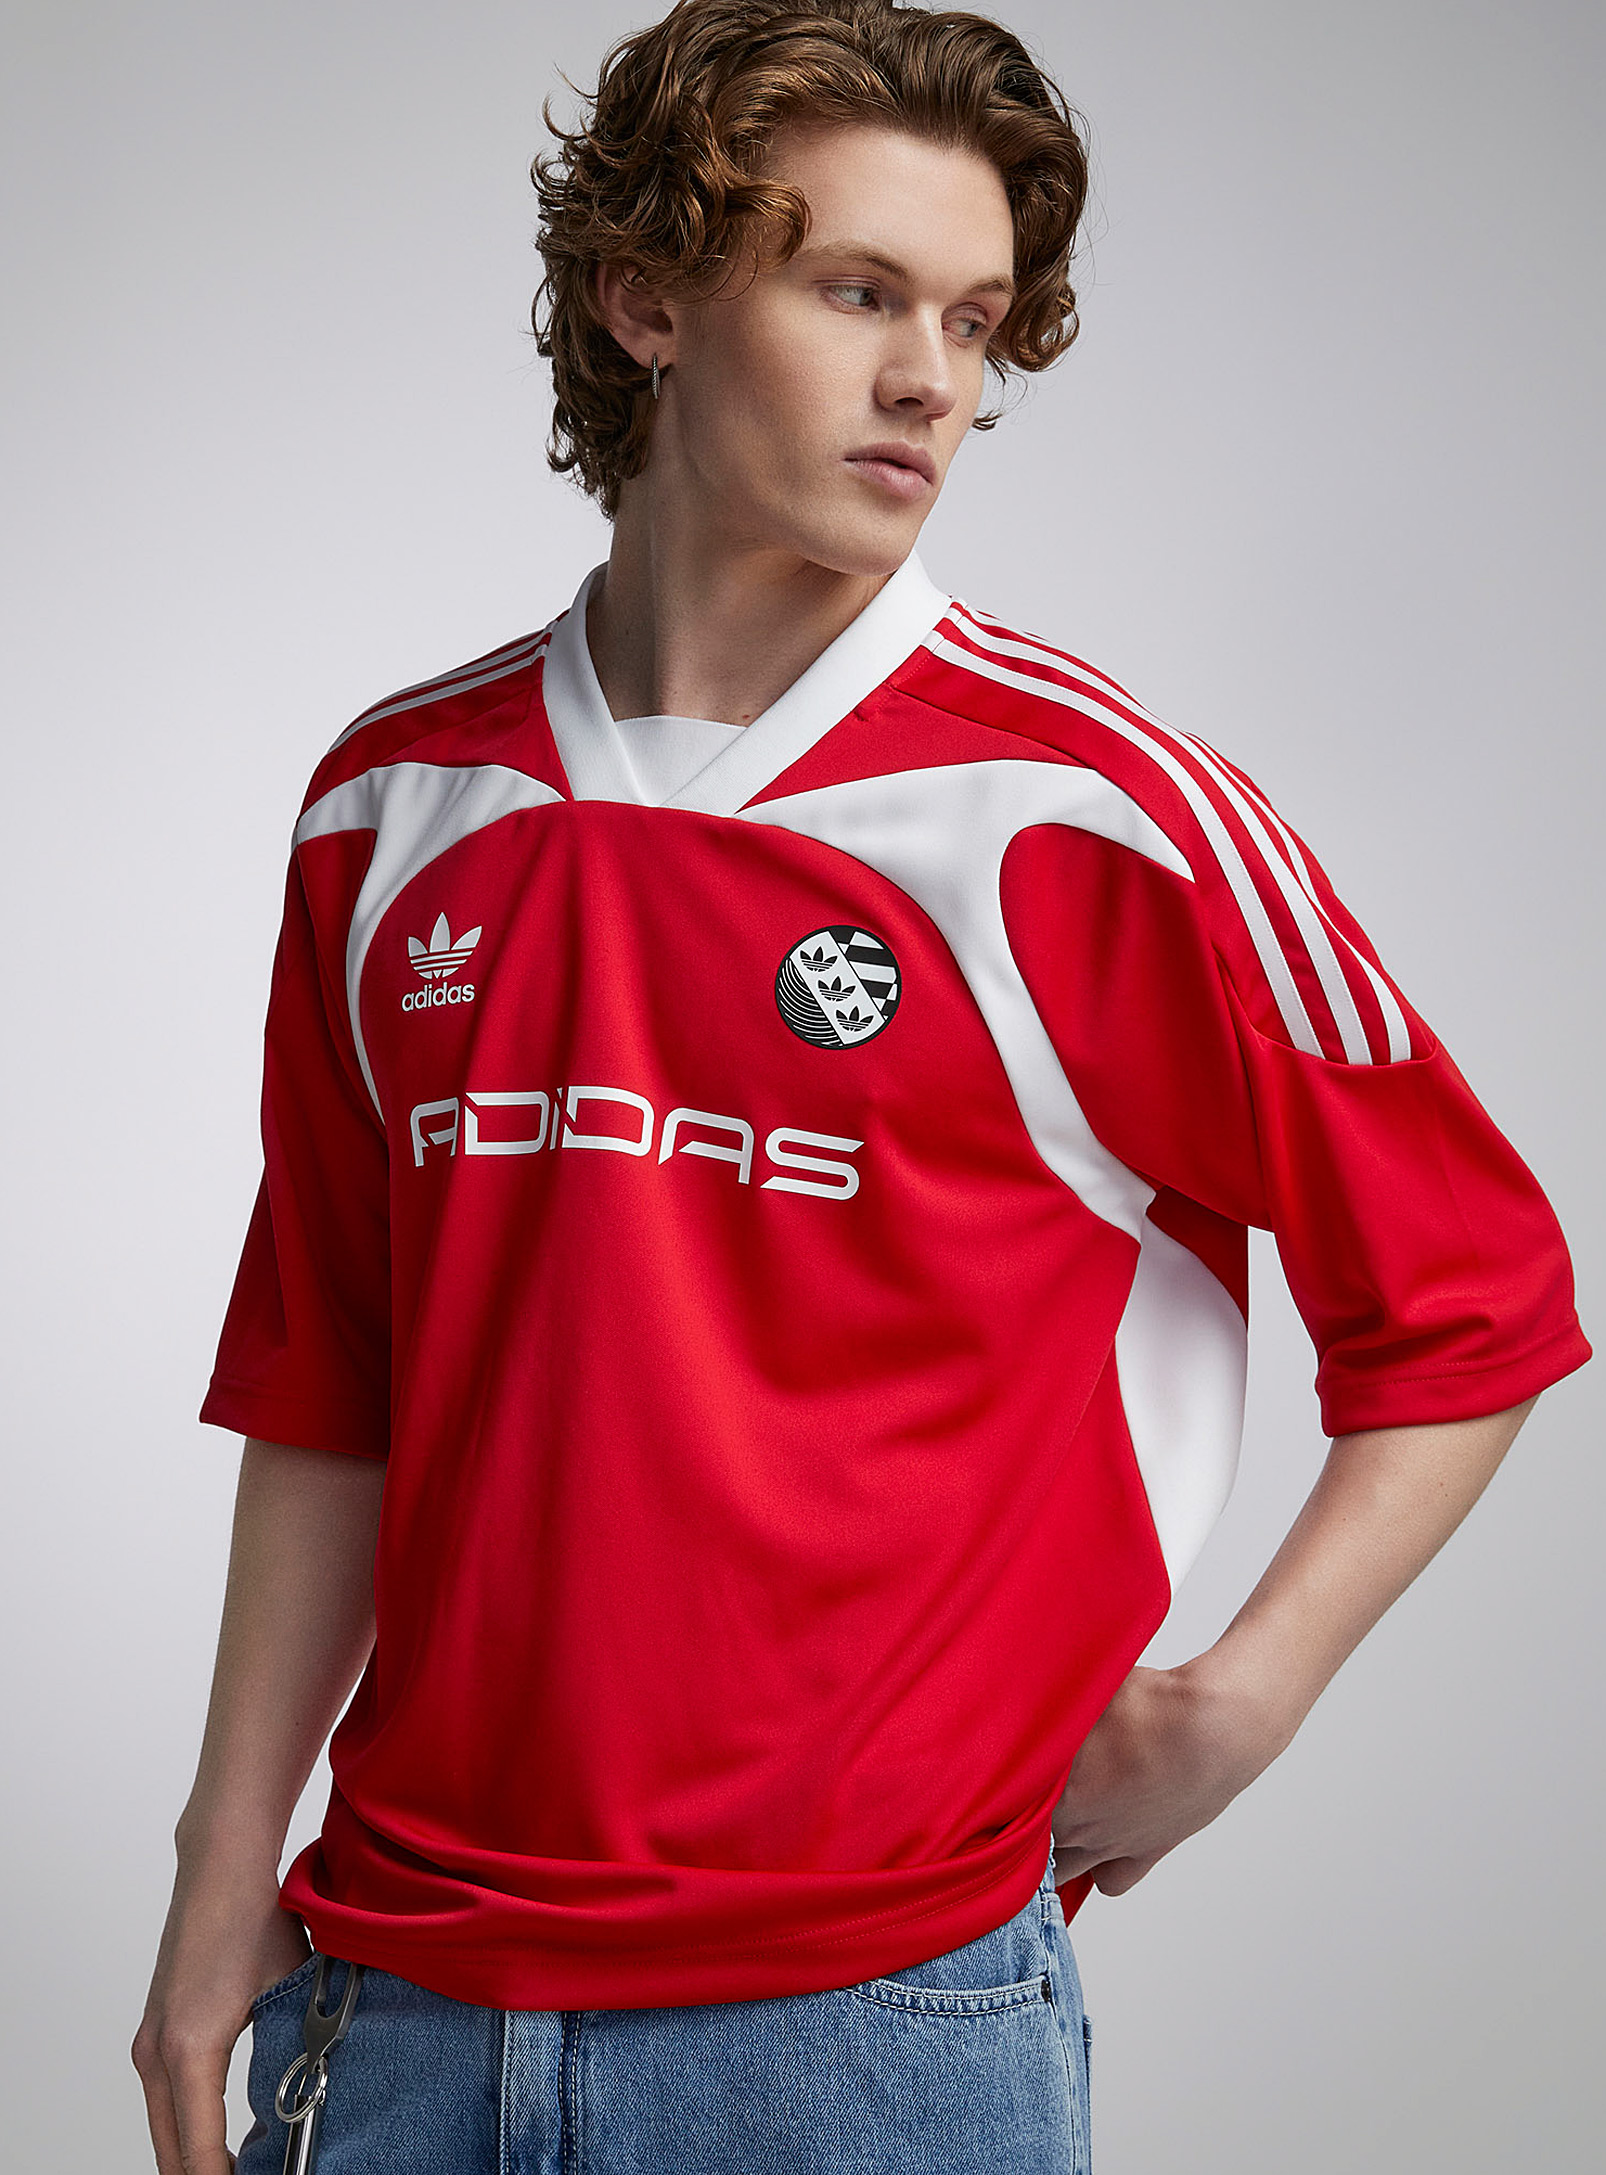 Adidas - Men's Adilenium soccer jersey